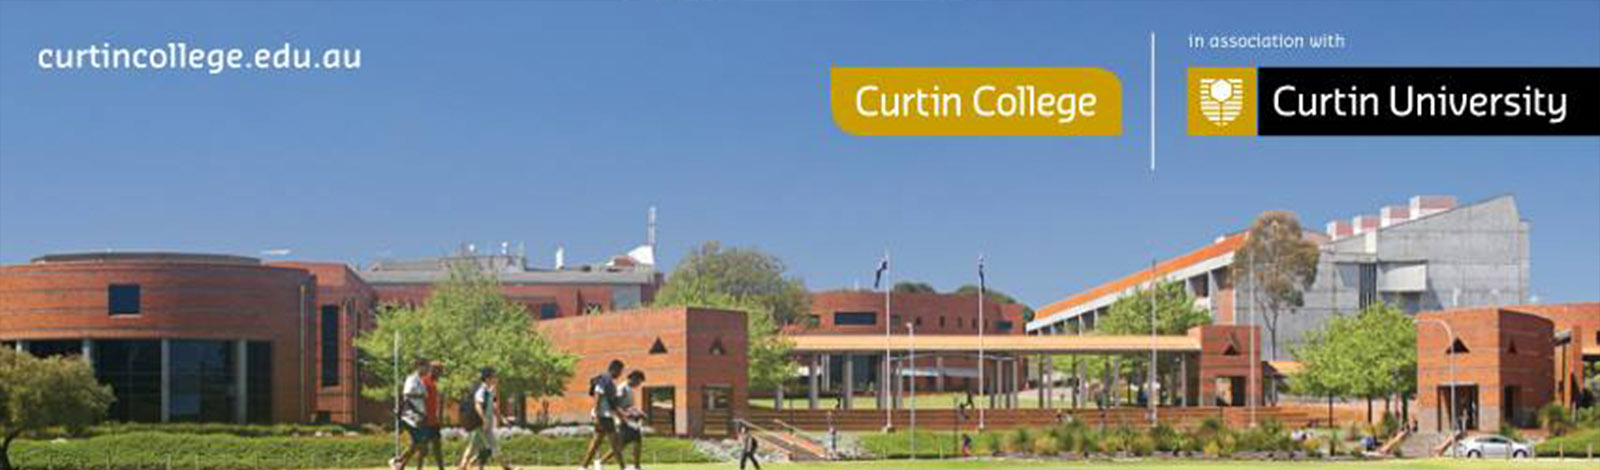 Curtin college